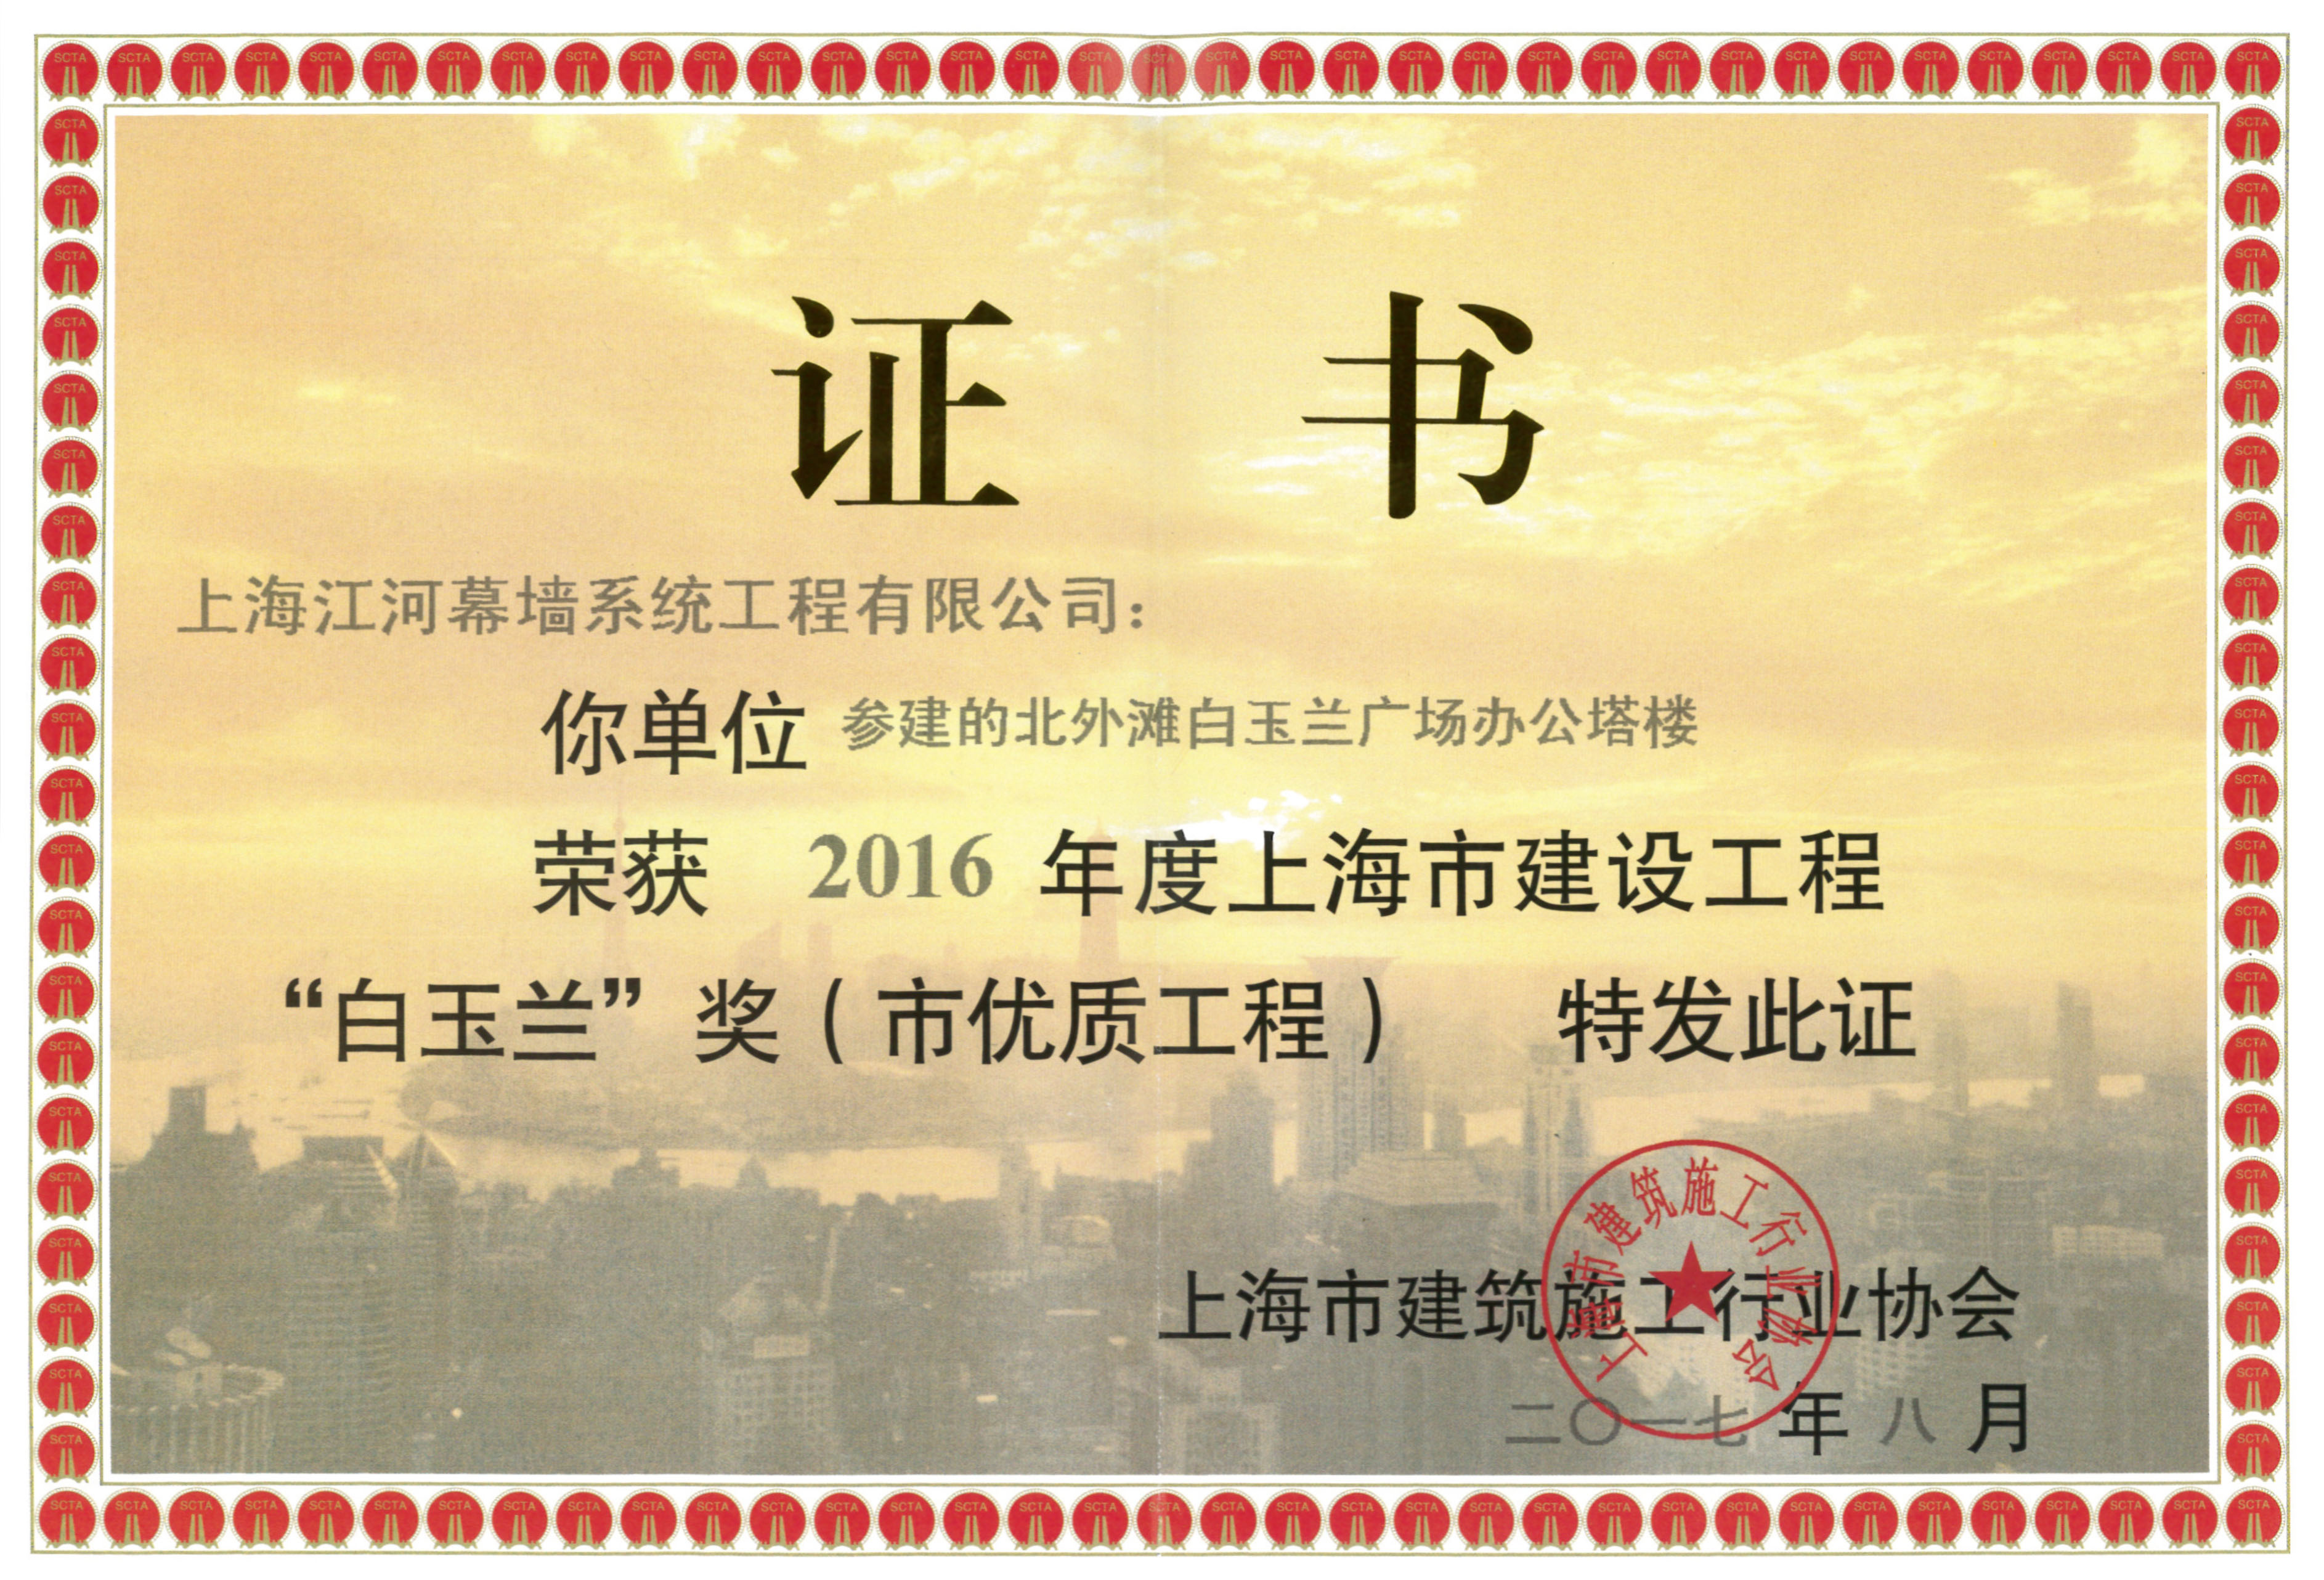 Shanghai North Bund White Magnolia Tower Project win “Magnolia Award”